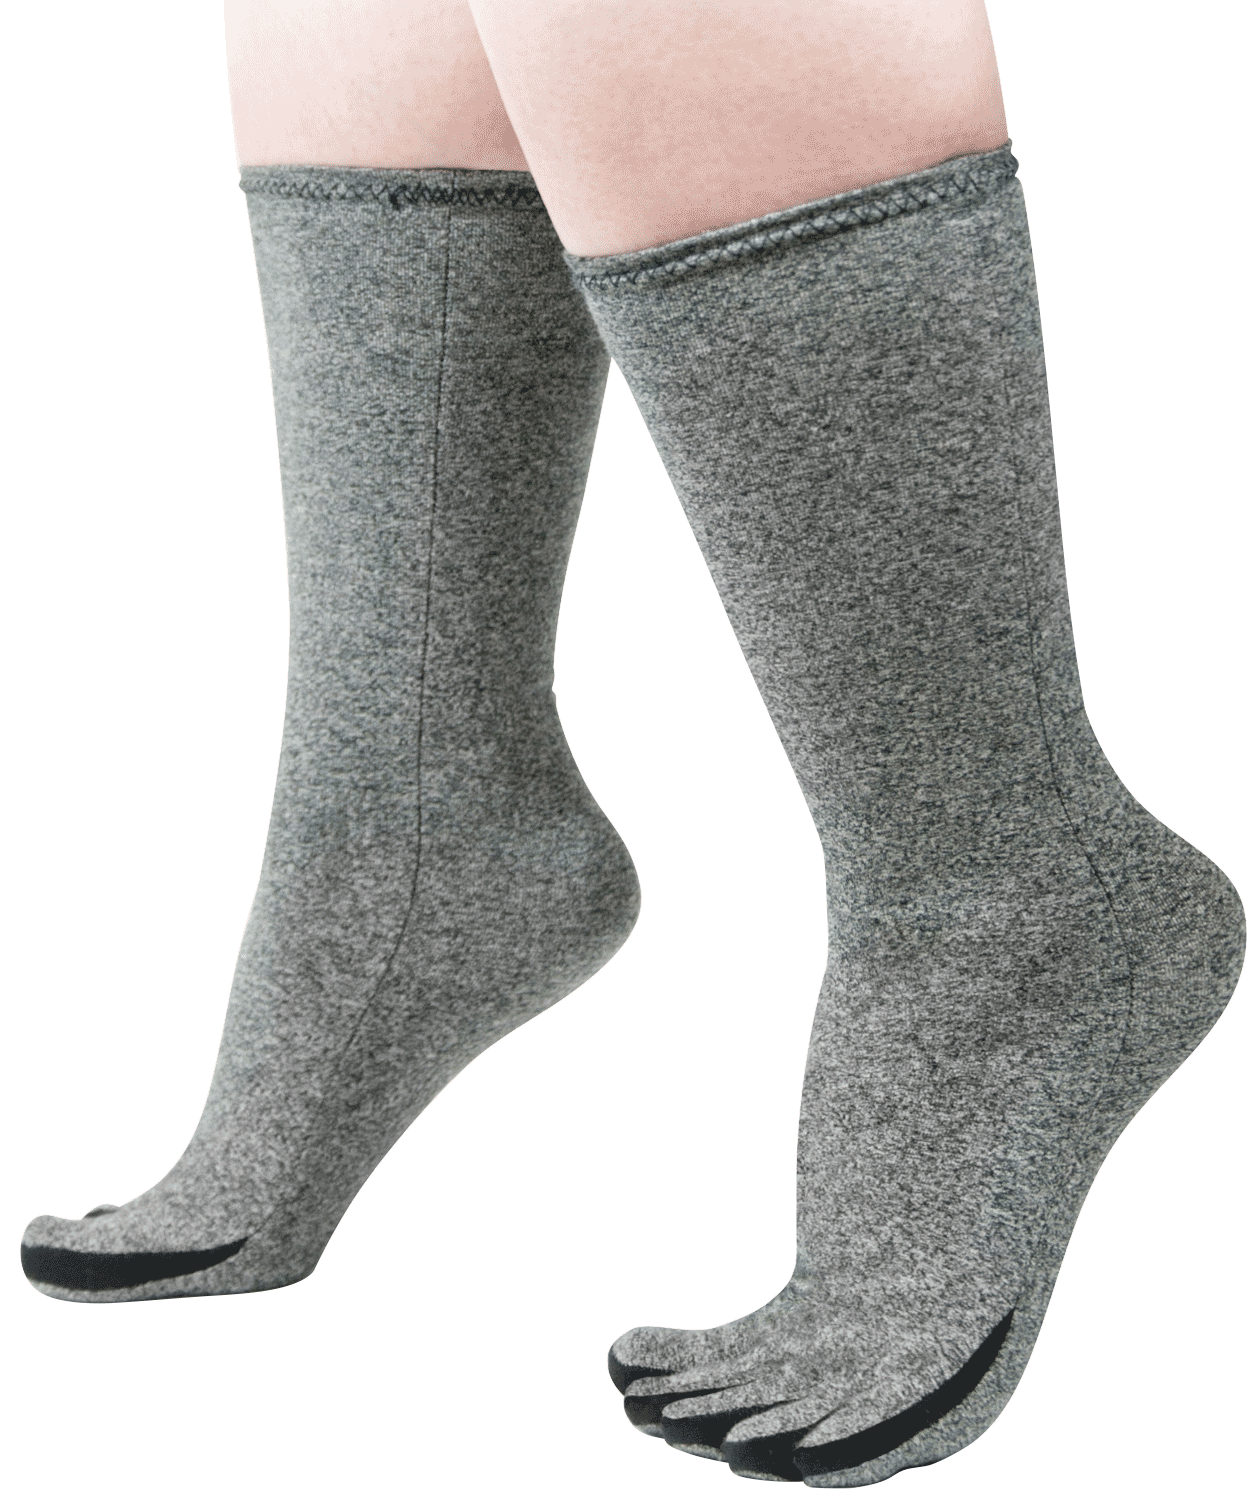 IMAK Arthritis Socks, A20191, Medium (7.5-9.5 Men's/8.5-11.5 Women's) - 1 Pair